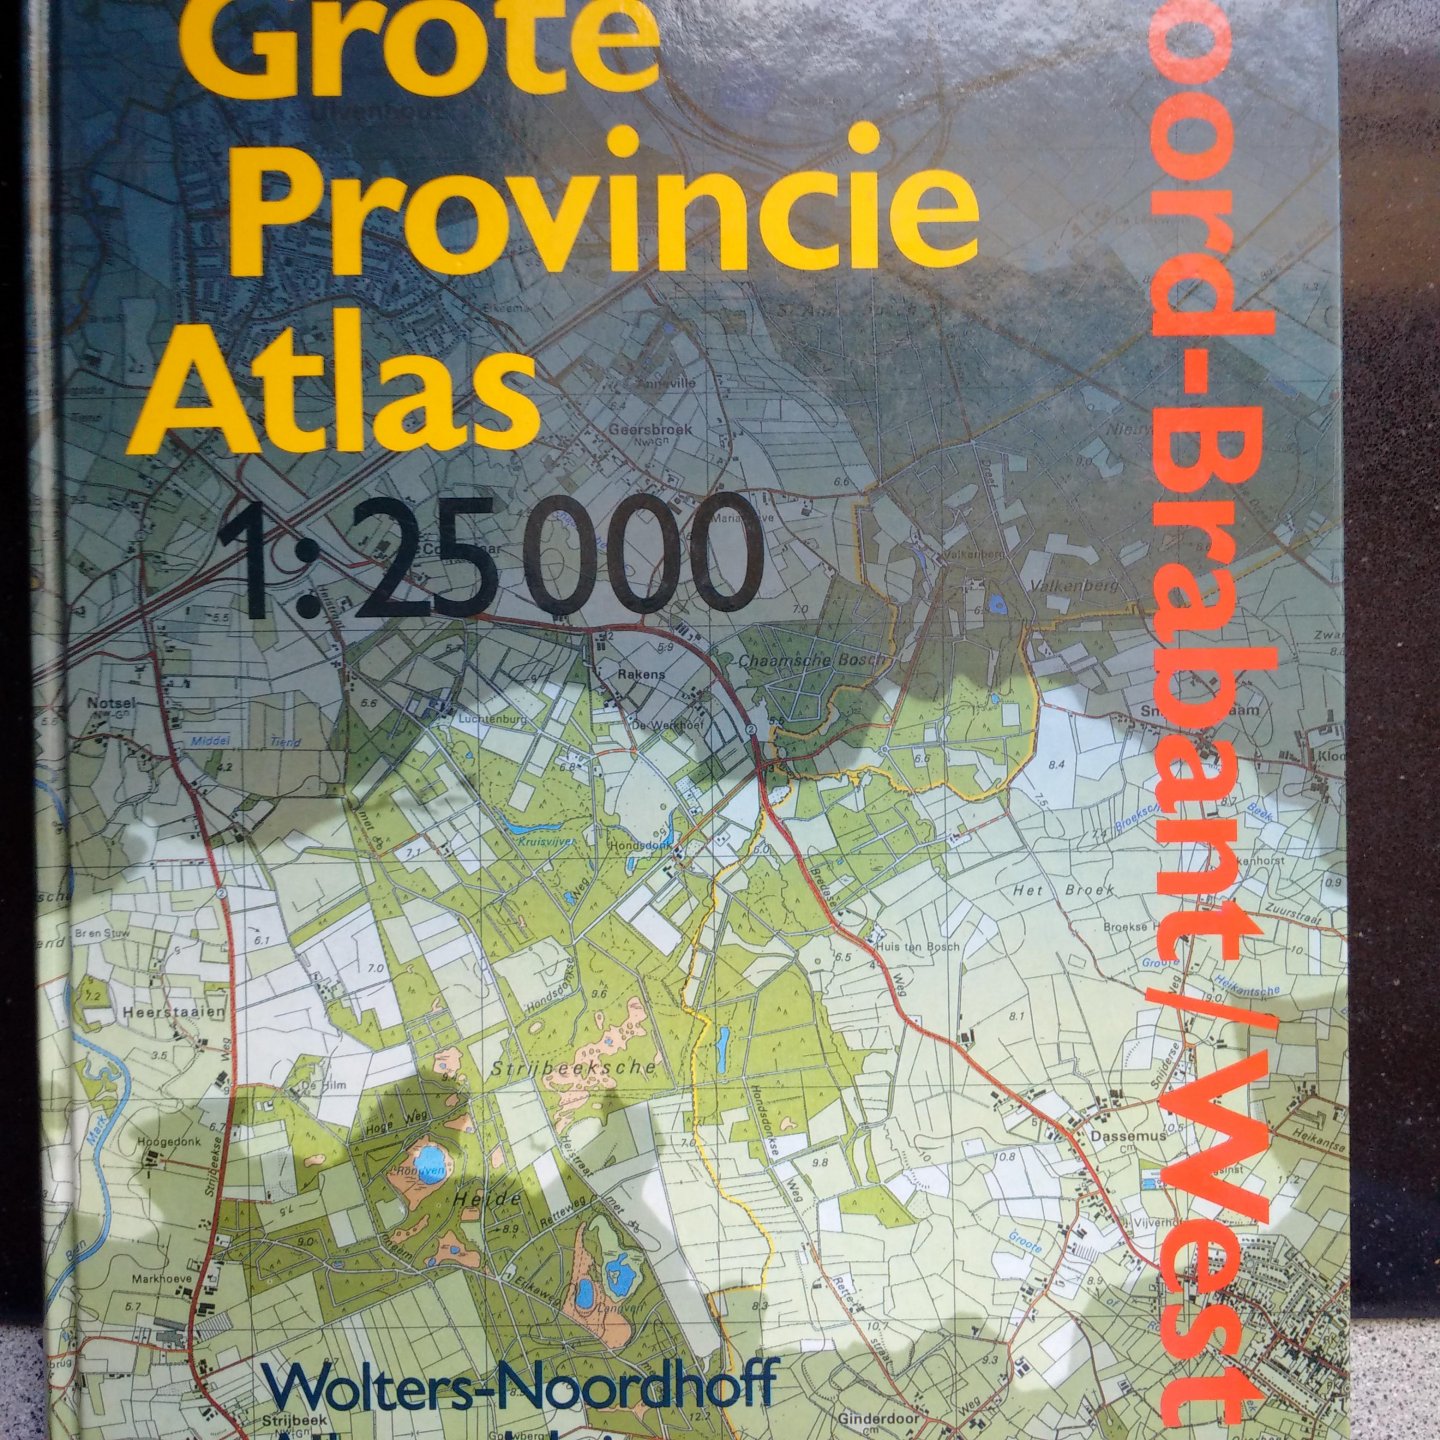 nvt - Grote Provincie Atlas: Noord-Brabant/West